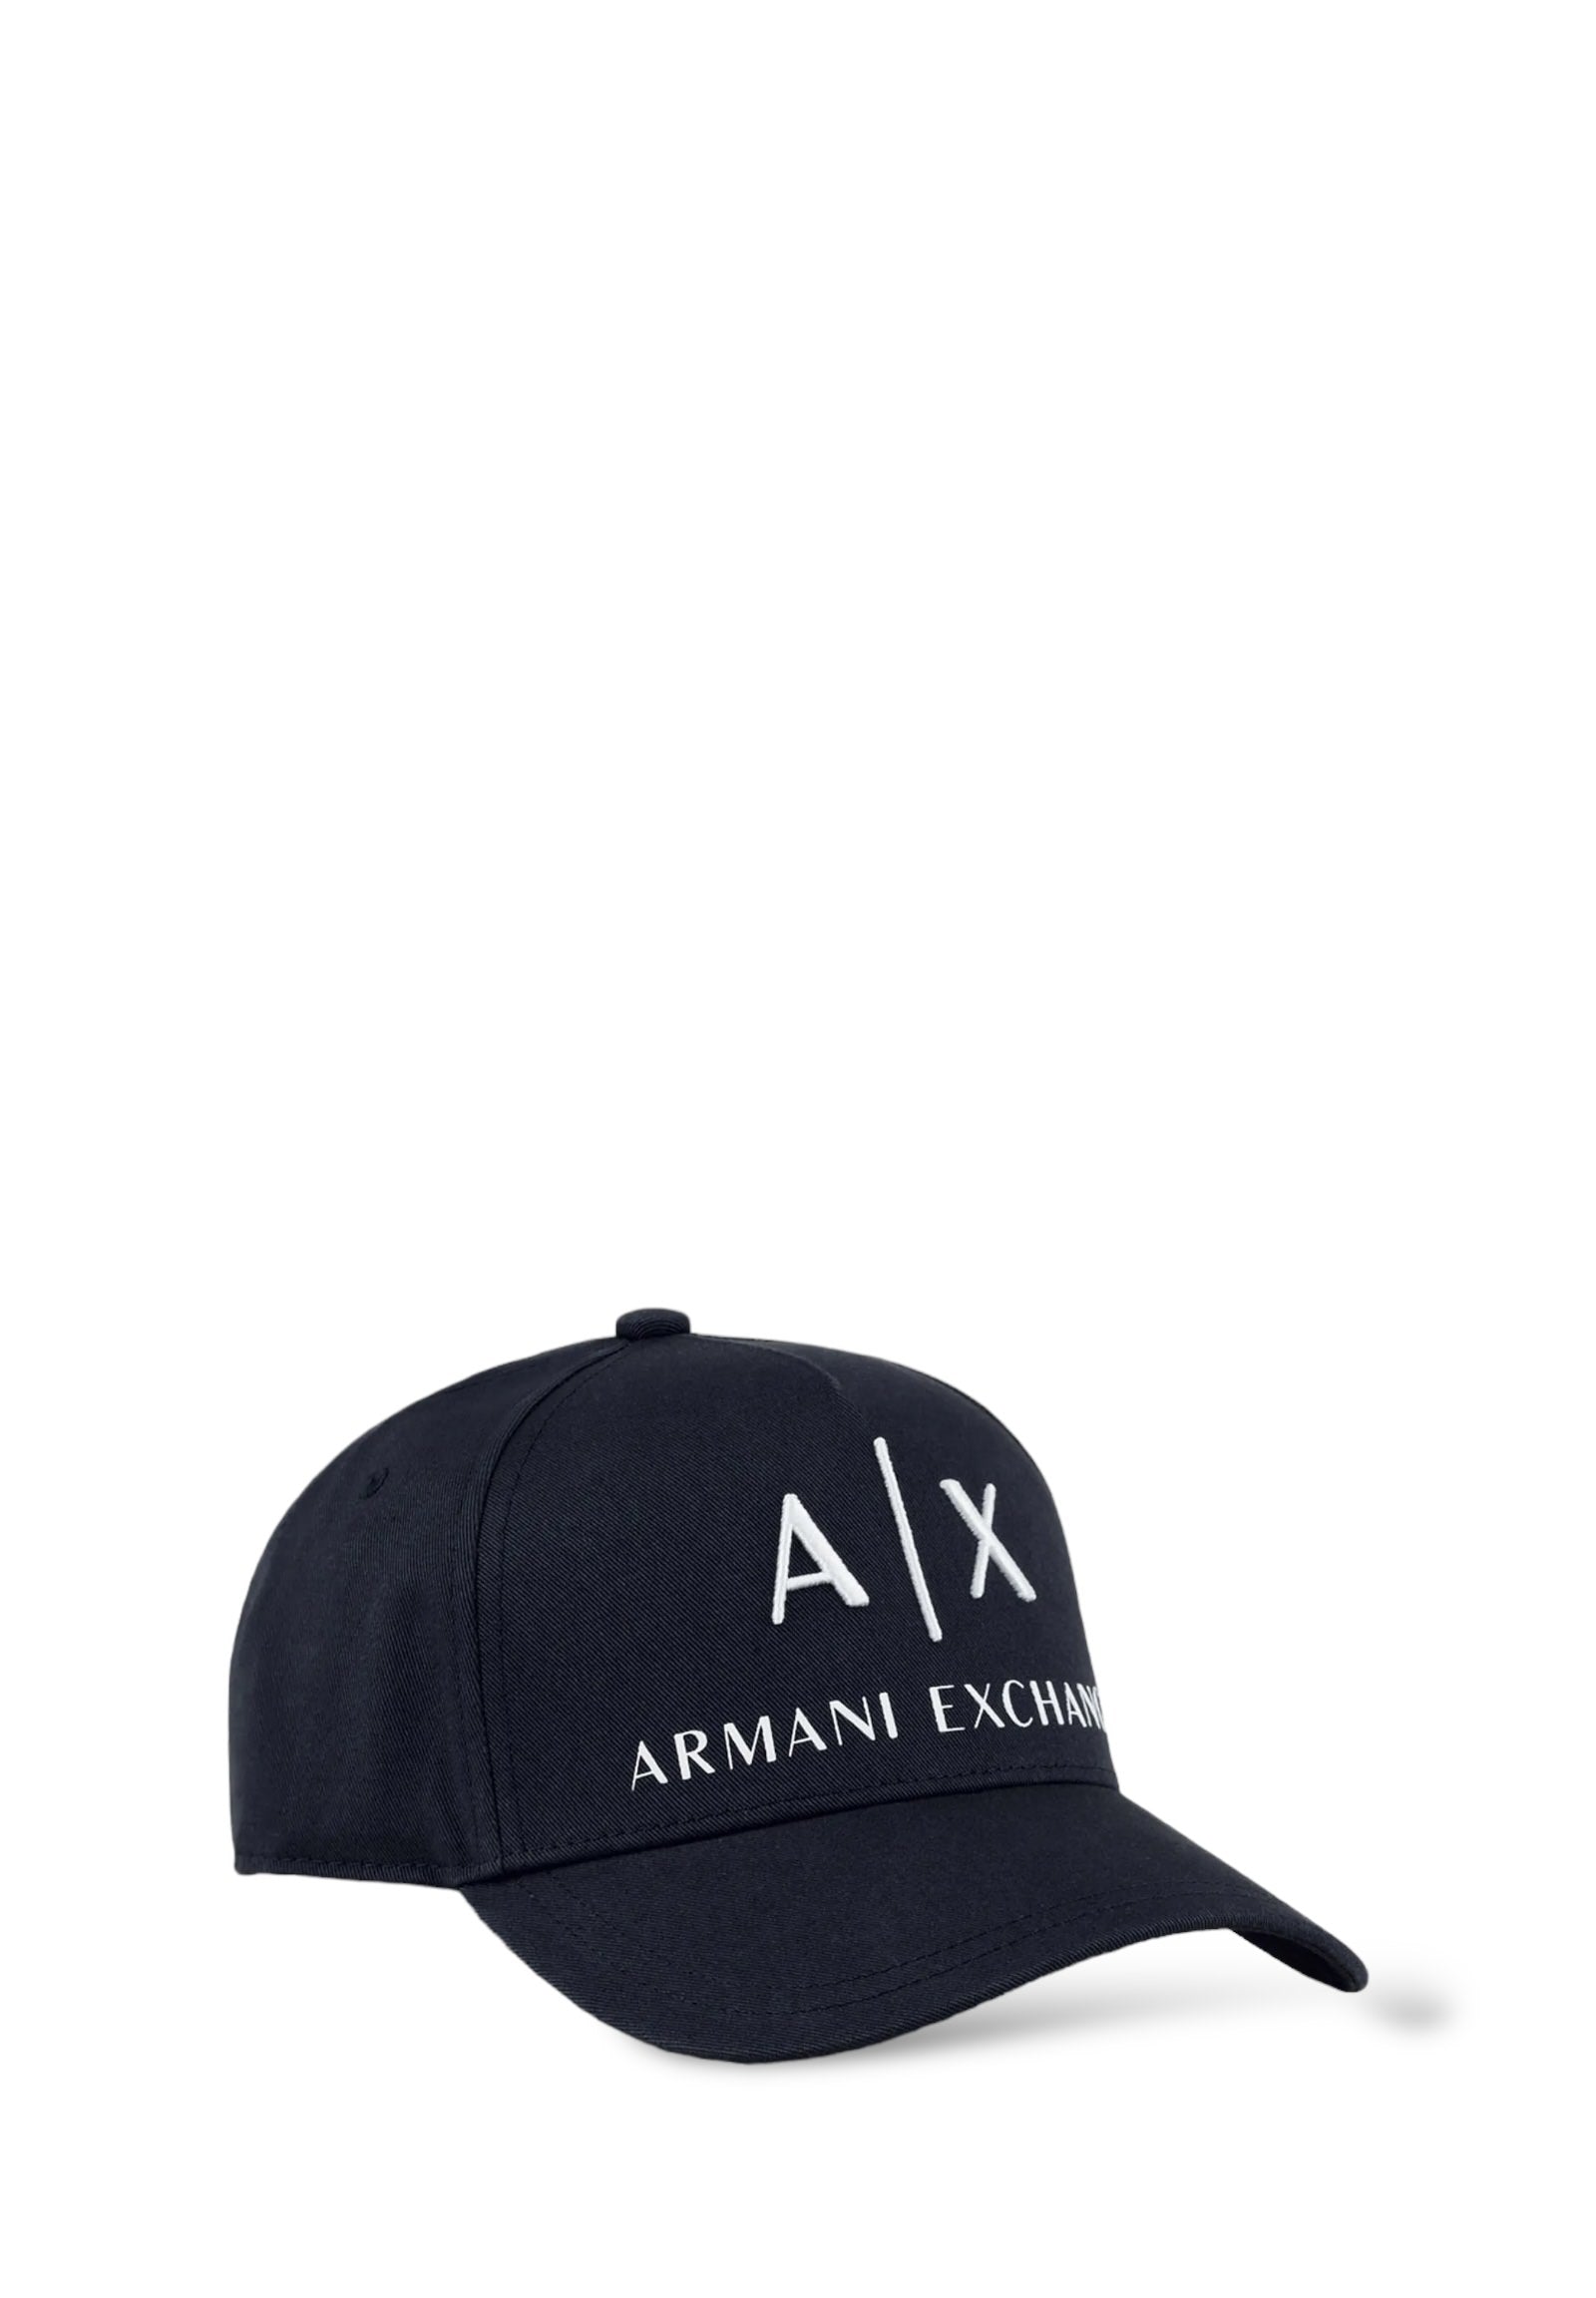 Armani Exchange Cappello Da Baseball 954039 Blu Navy, Bianco